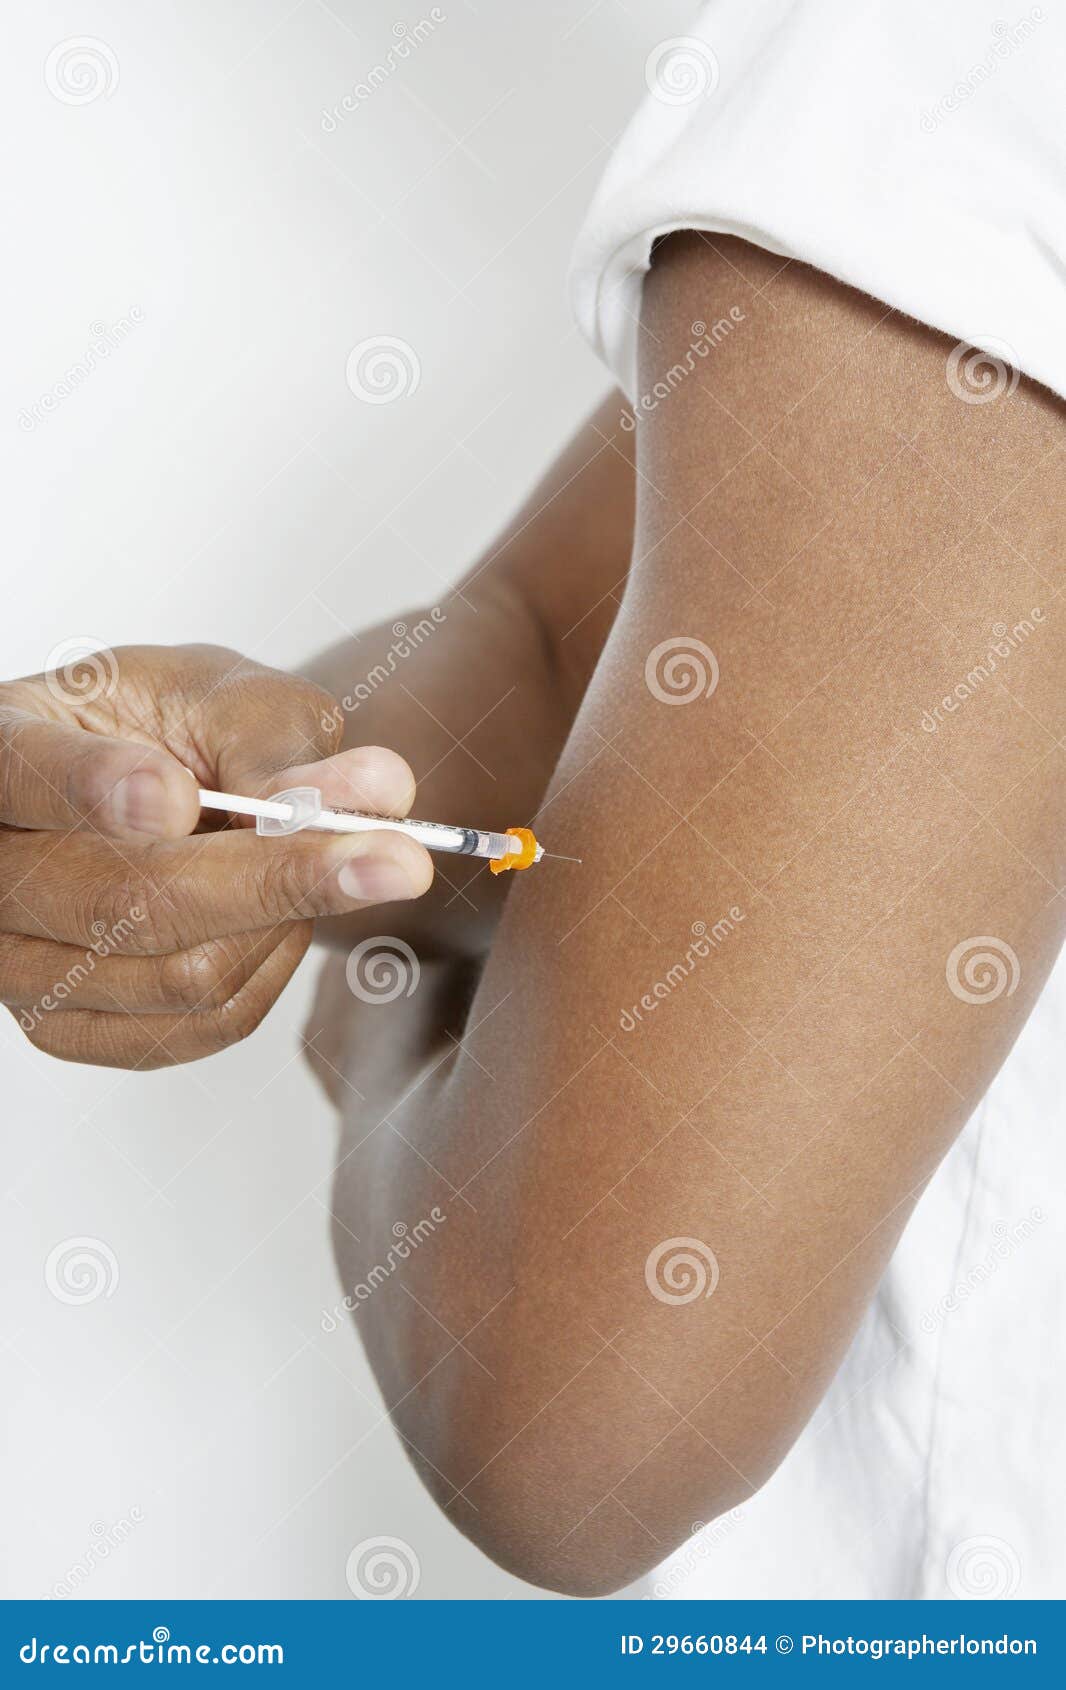 man injecting insulin using syringe